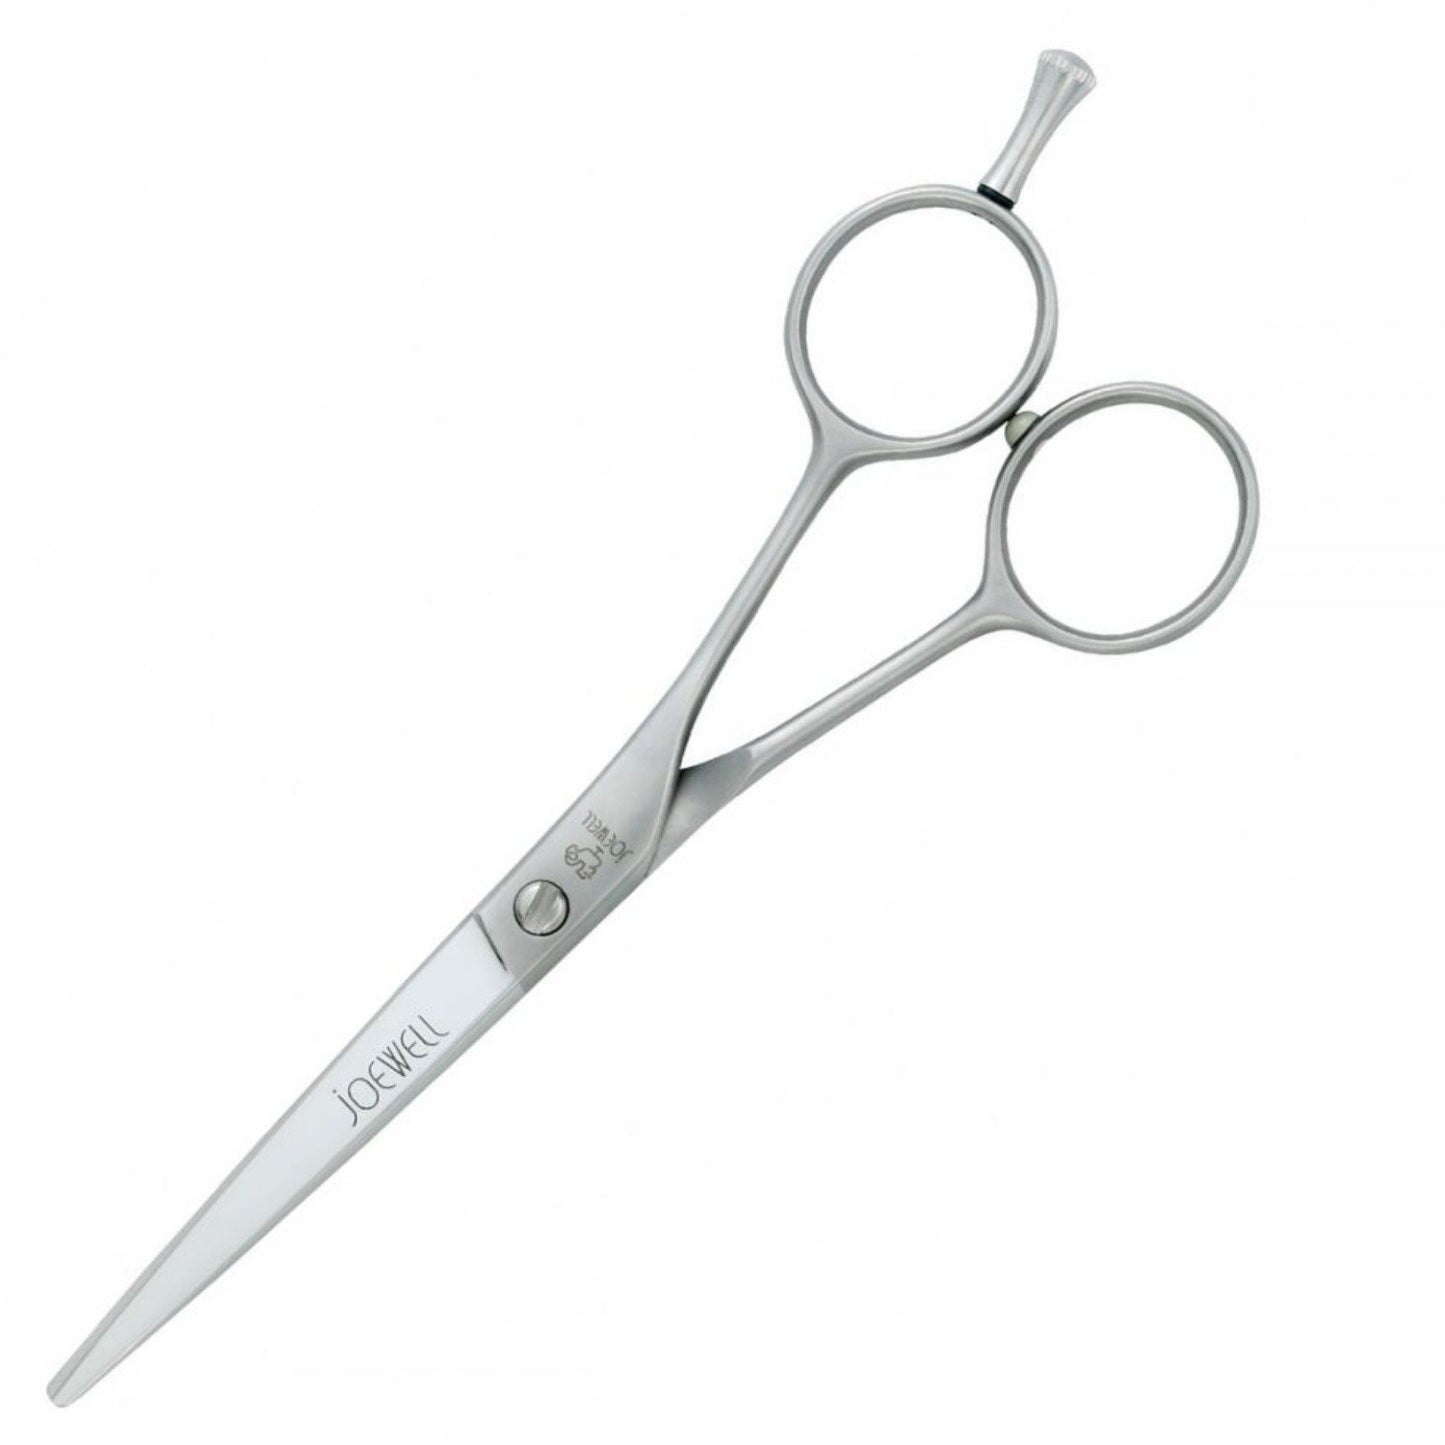 Joewell Classic Pro Hairdressing Scissors 4.5 Inch